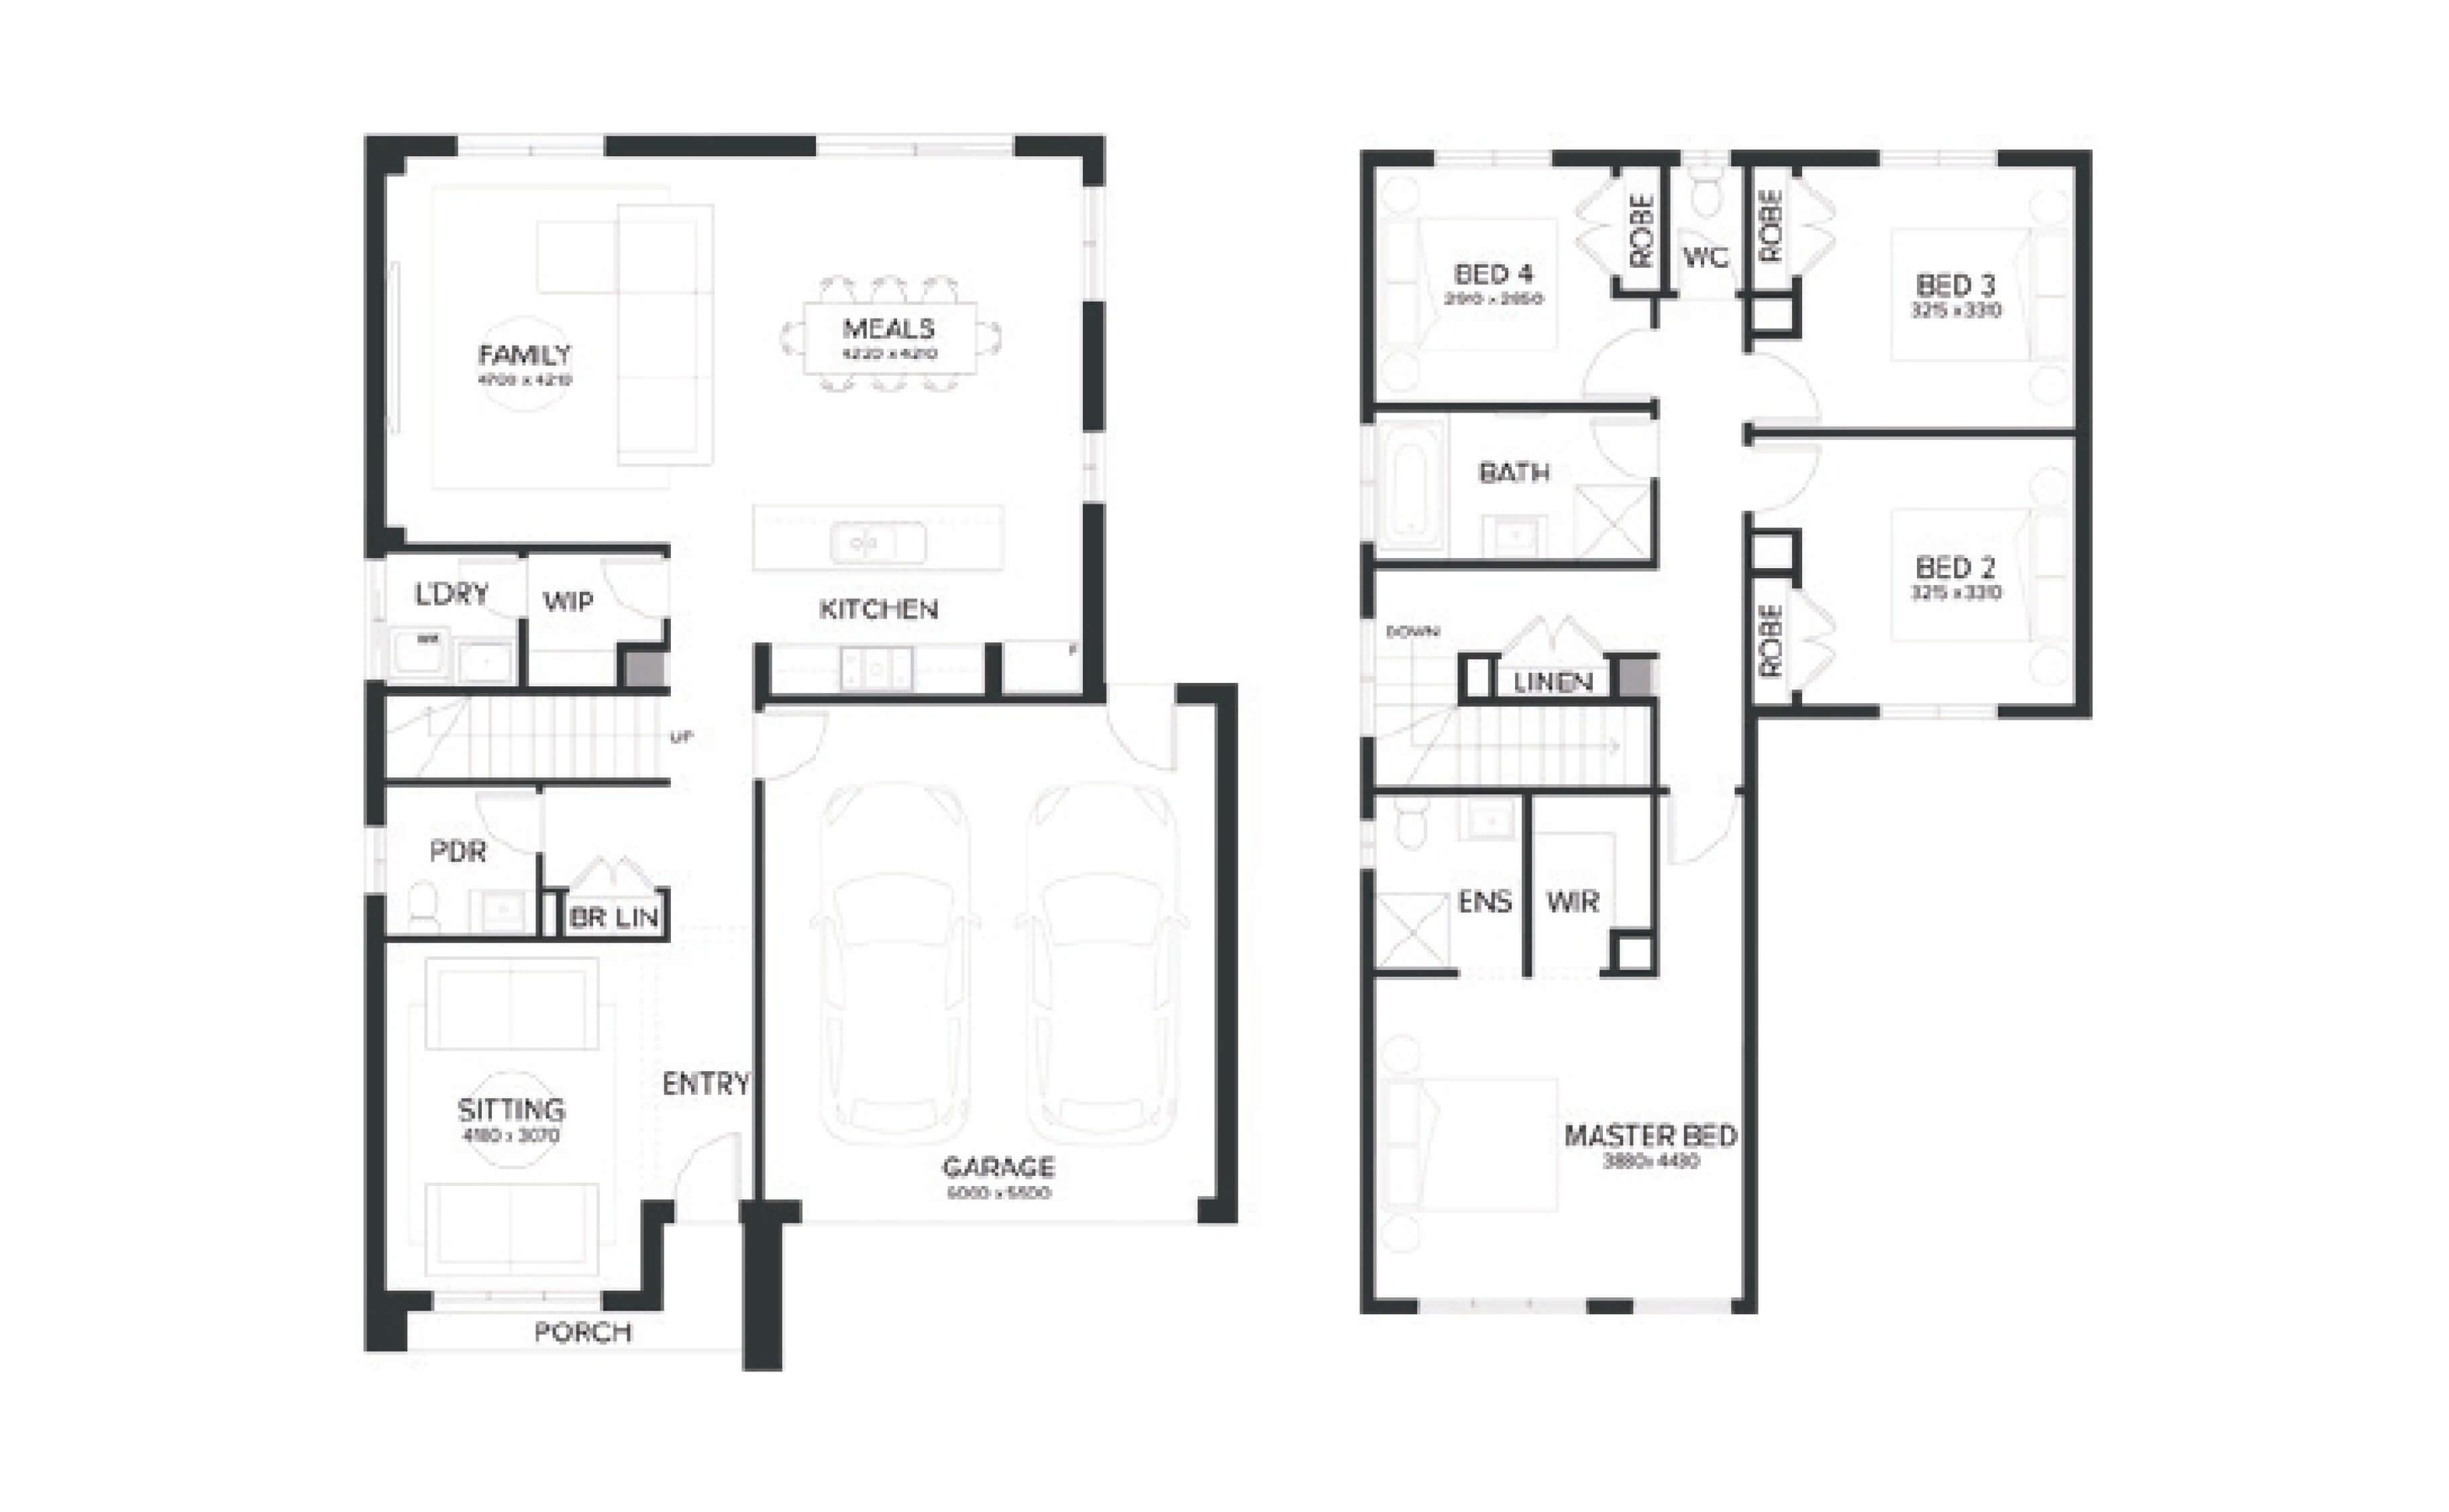 Lot /img/house-land/3049-manly/Floorplan/Thumb.jpg floorplan